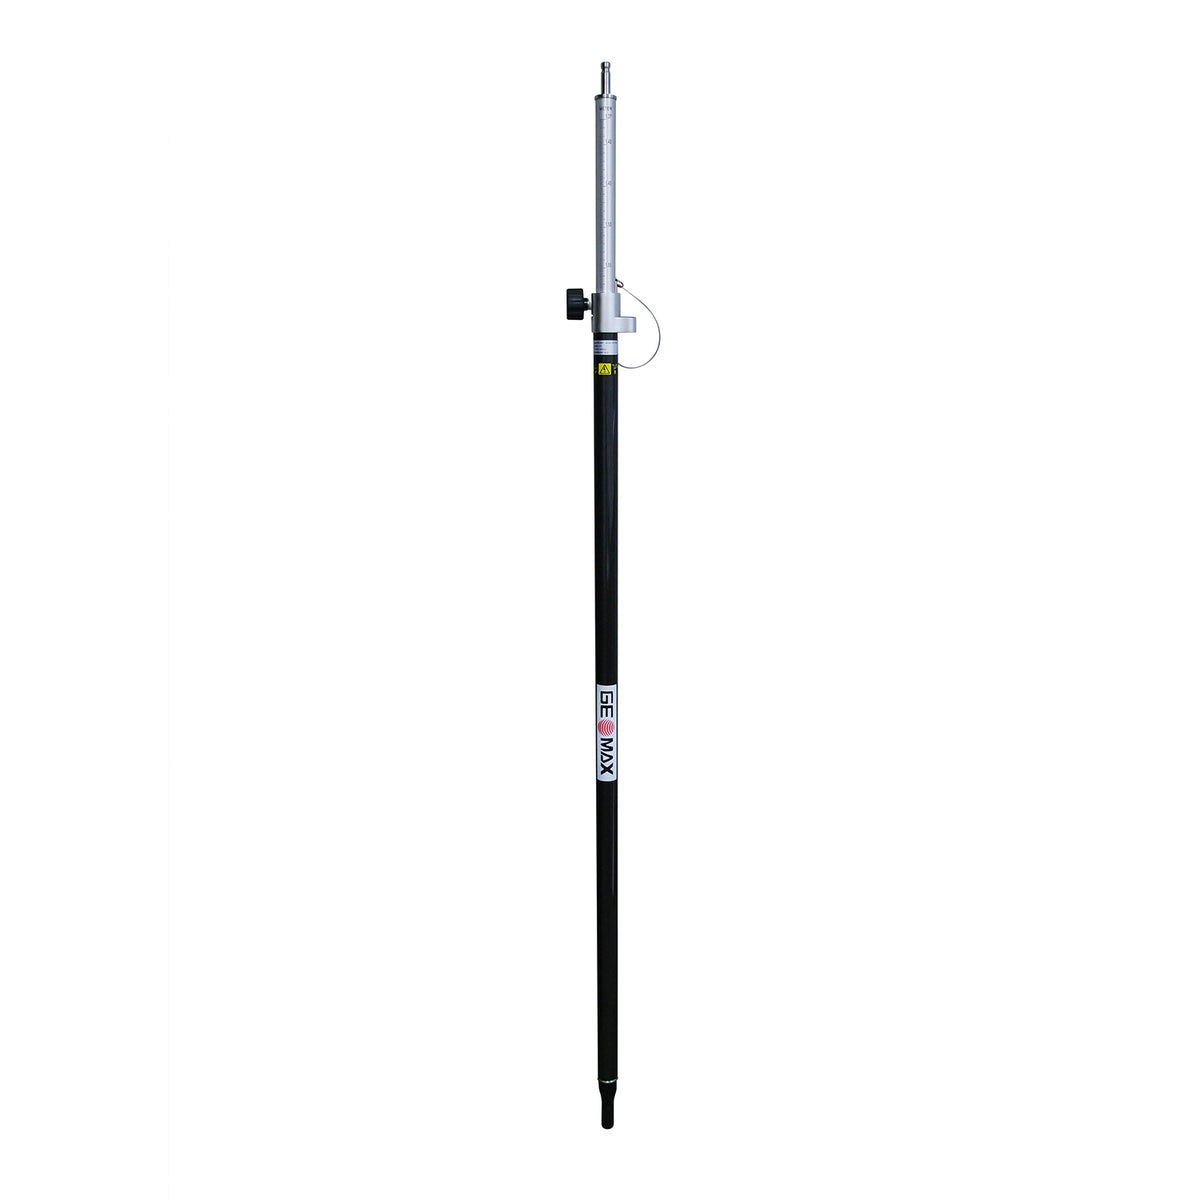 GeoMax ZPC201 Telescopic Carbon Fiber and Aluminum Pole for TPS -Rods, Poles & Accessories- eGPS Solutions Inc.